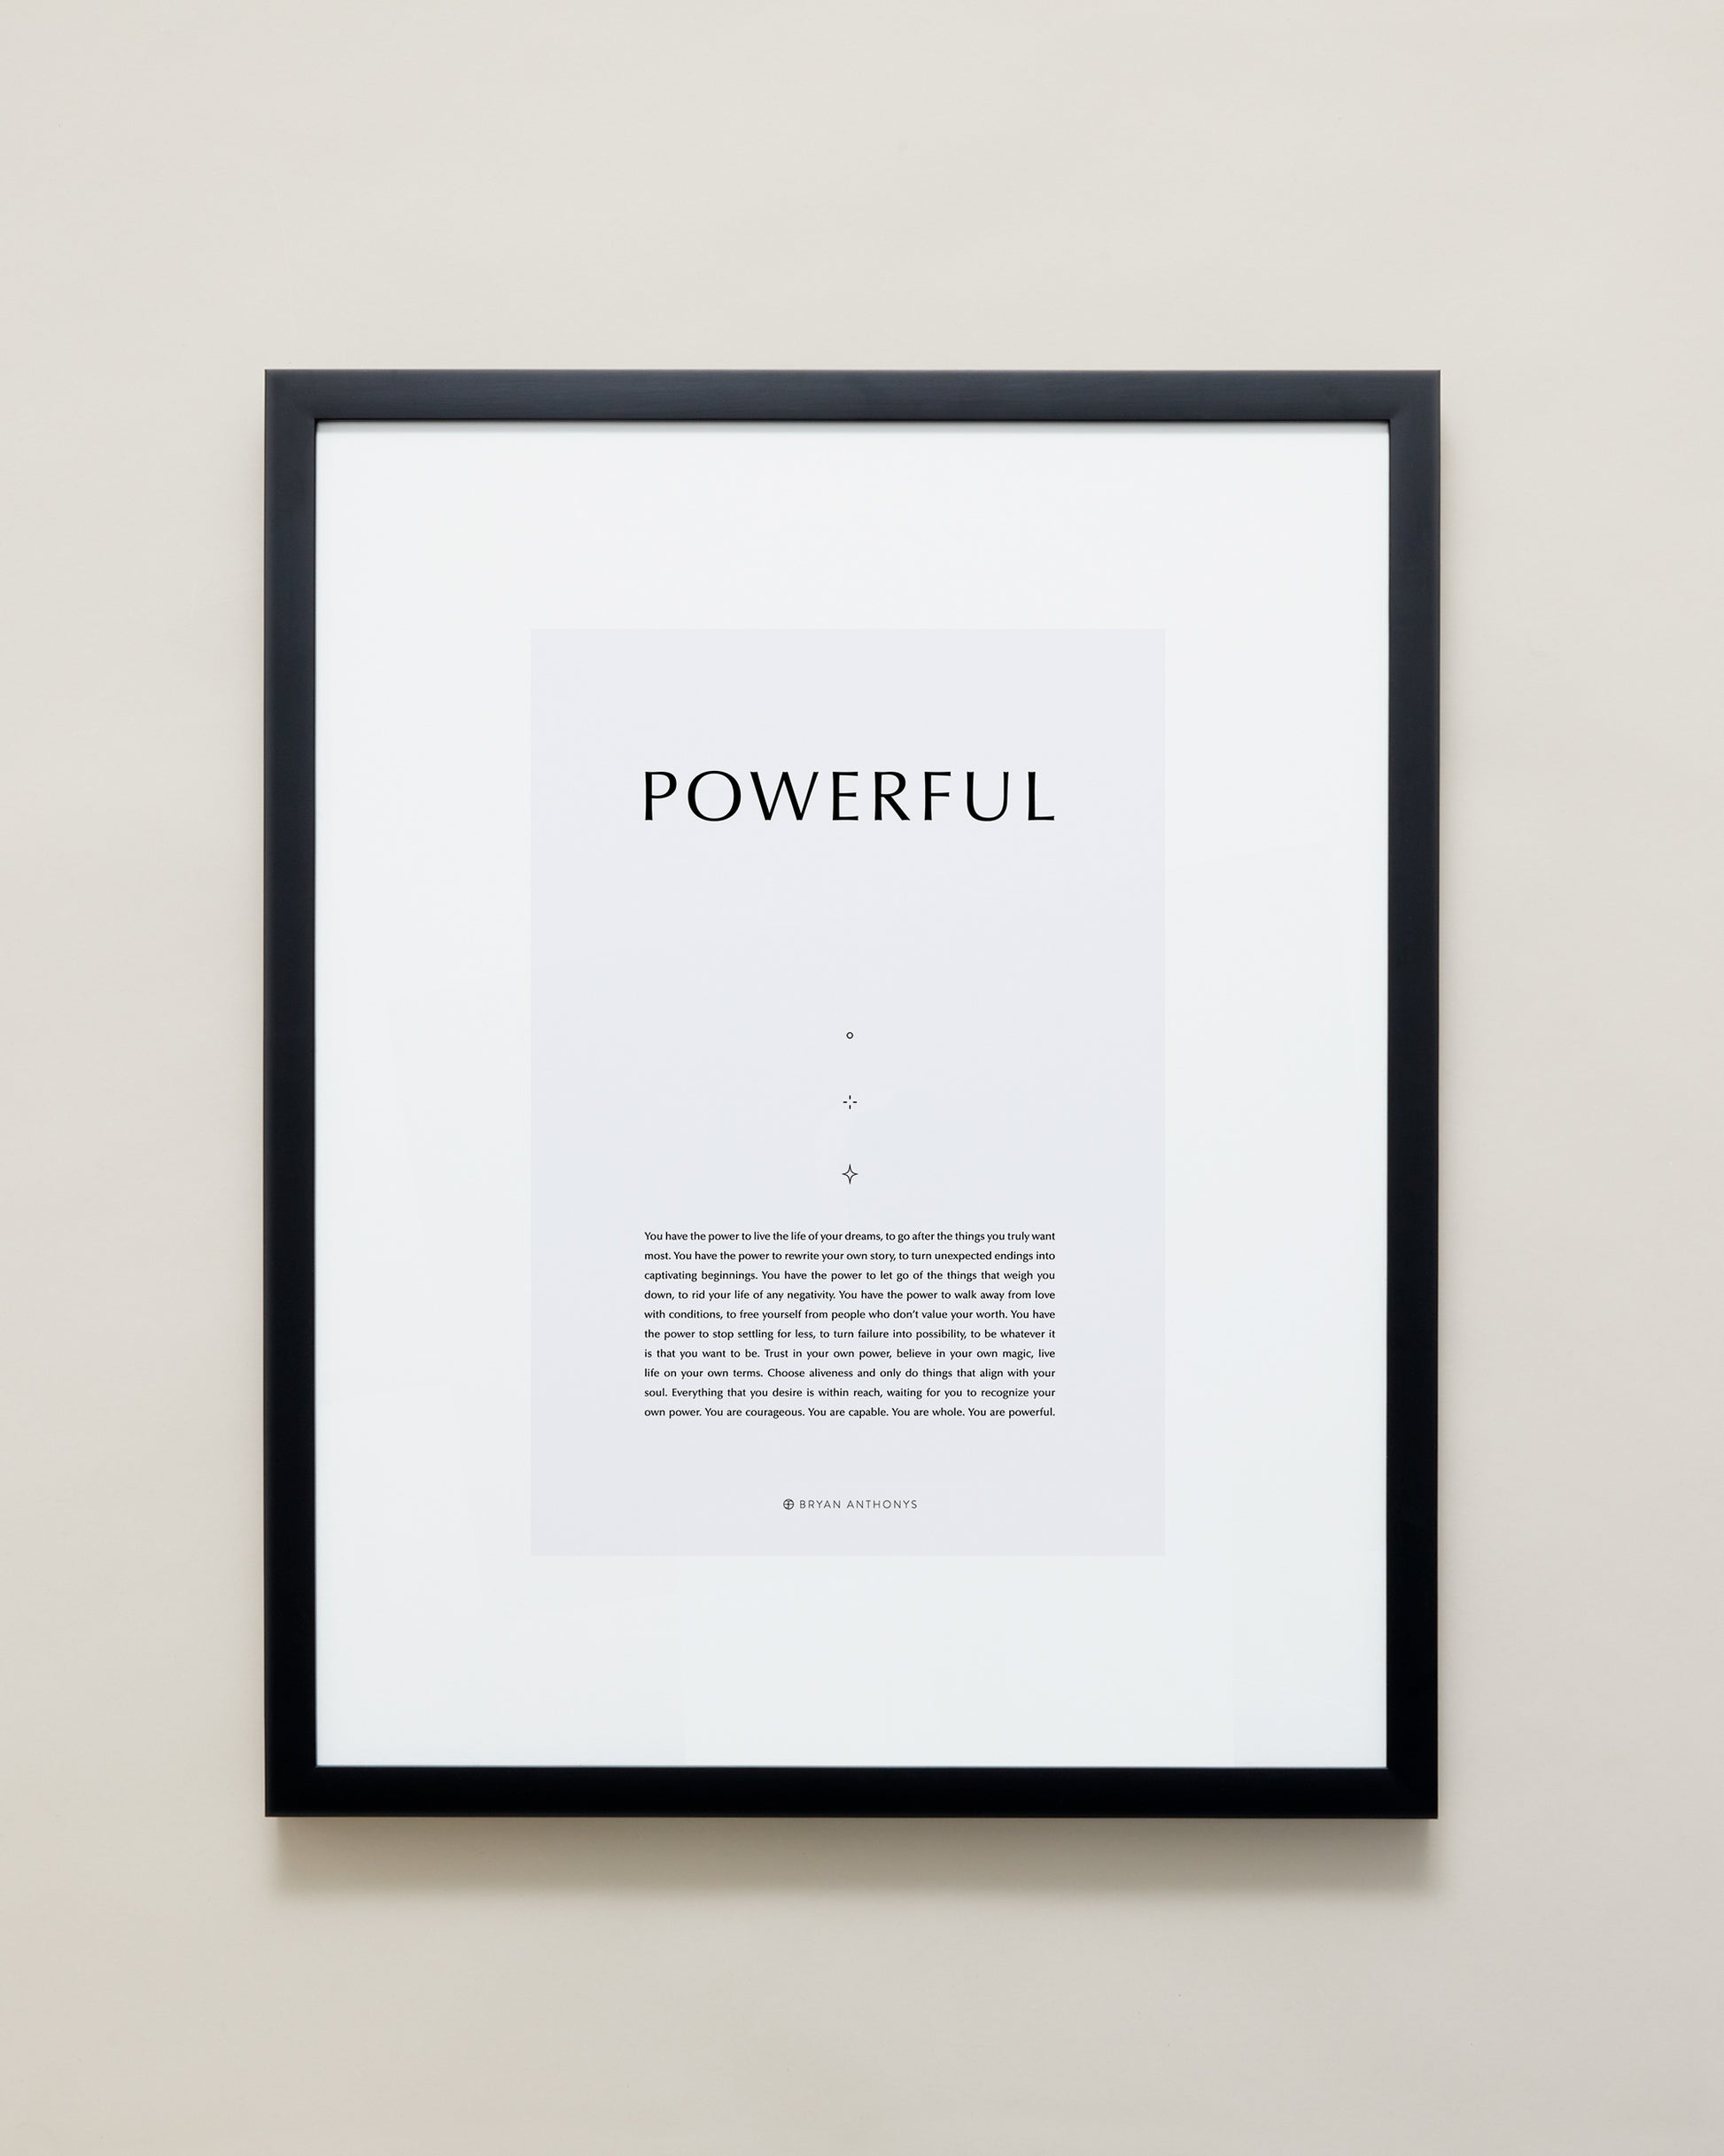 Bryan Anthonys Home Decor Purposeful Prints Powerful Iconic Framed Print Gray Art with Black Frame 16x20